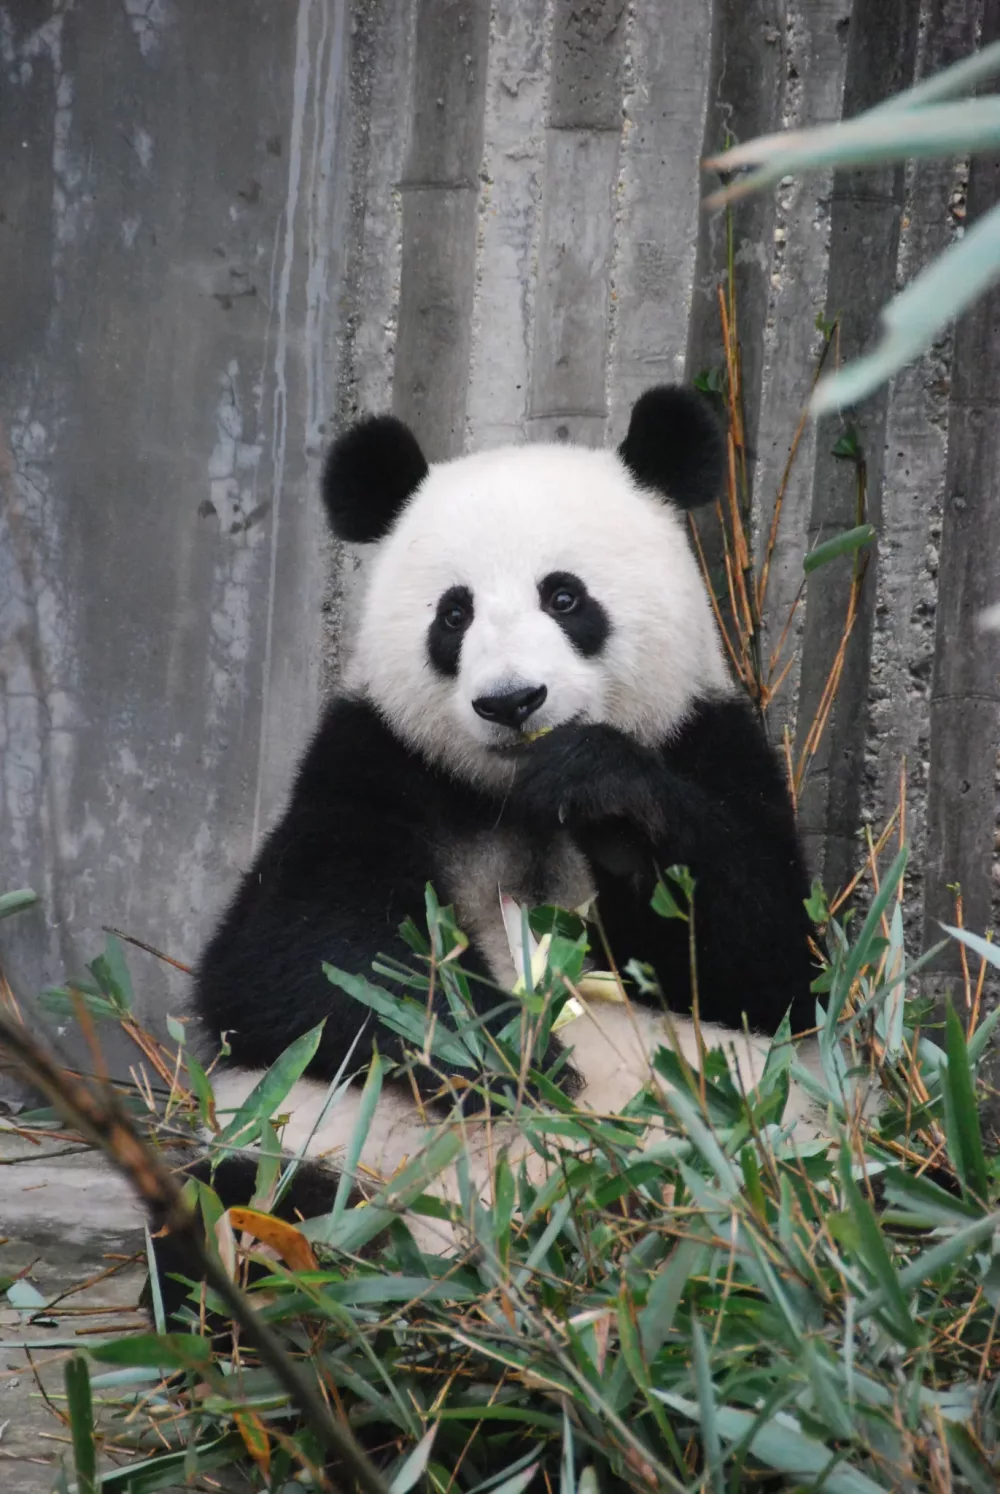 panda at Berlin Zoological Garden, Germany